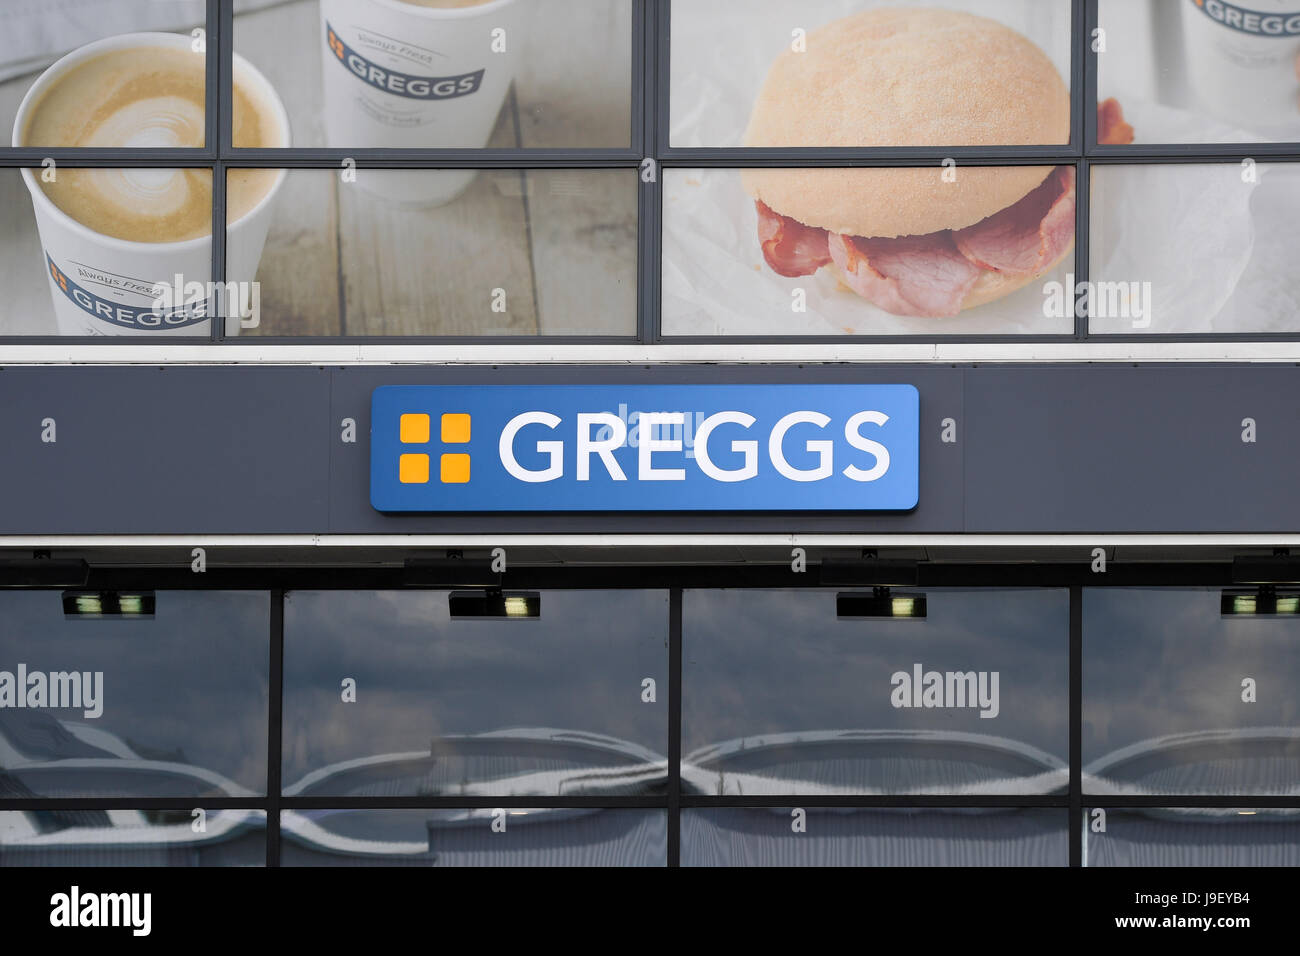 Greggs bakery sign Stock Photo